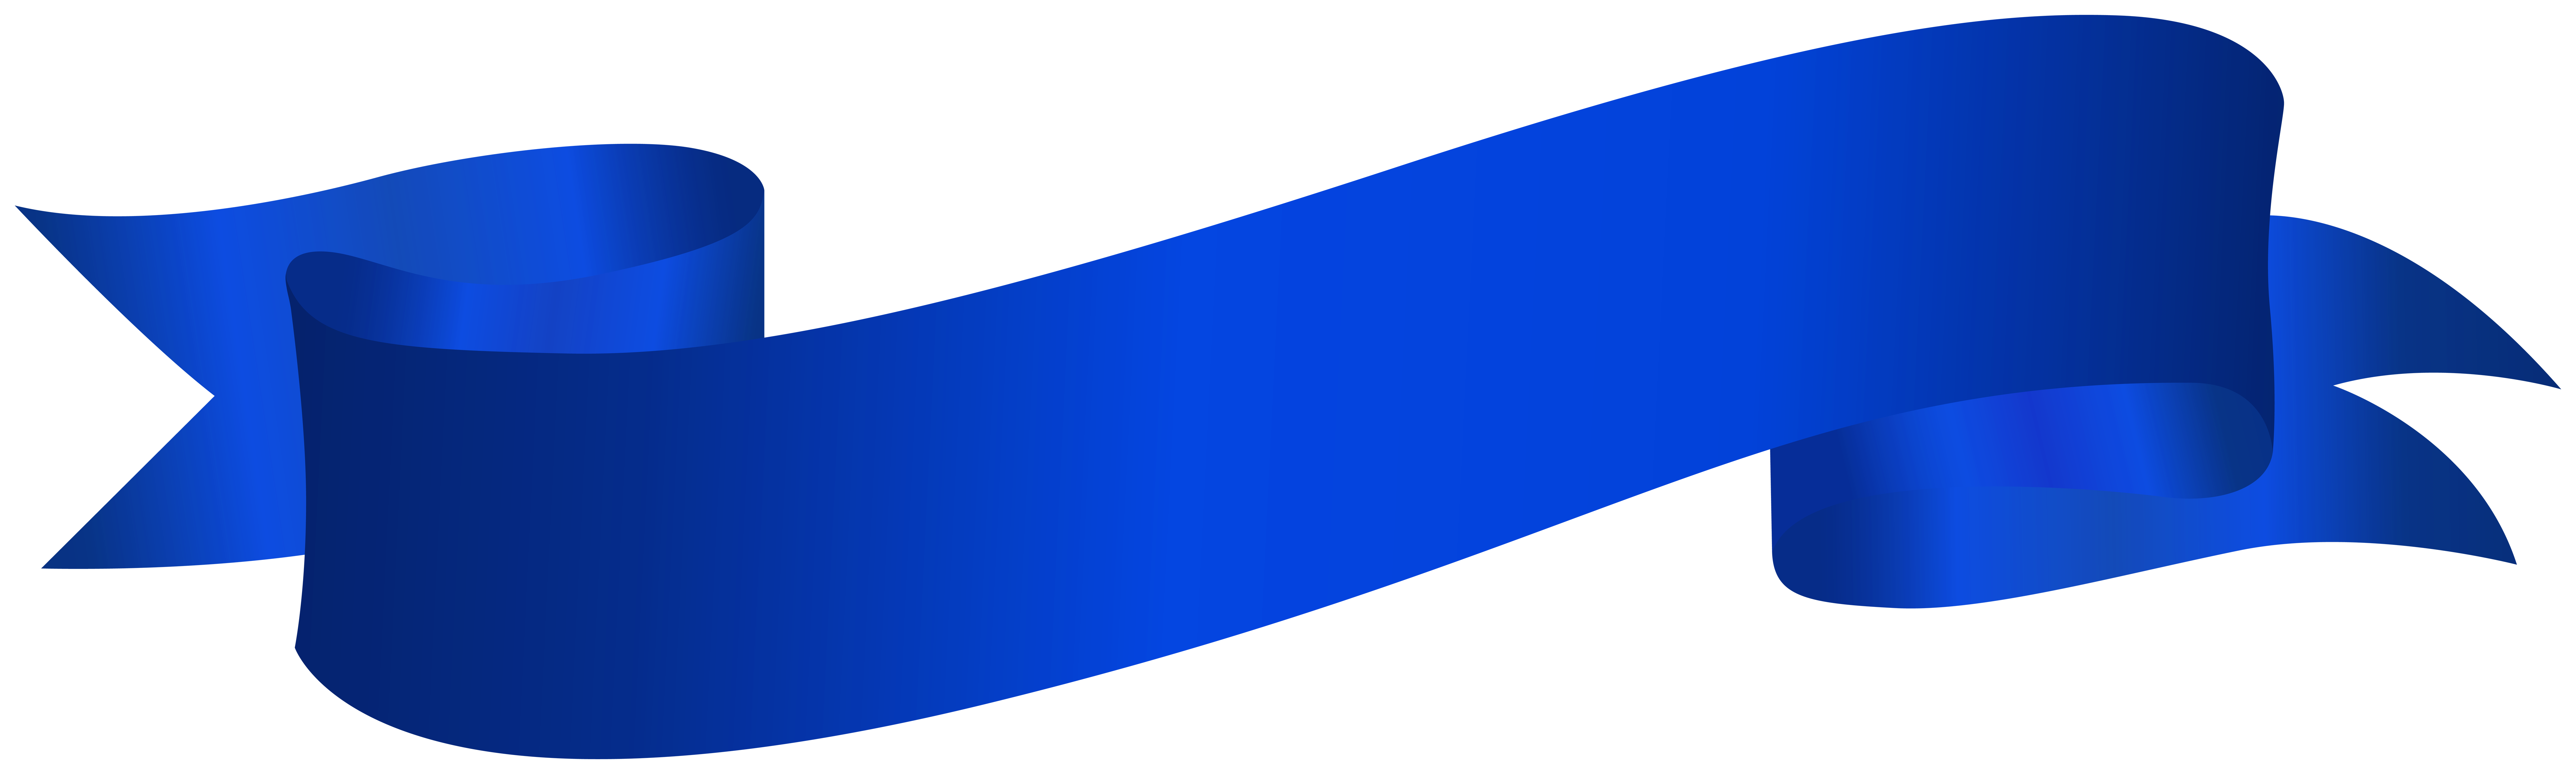 Free: Blue Ribbon Banner Png For Kids - Blue Banner Ribbon Png 